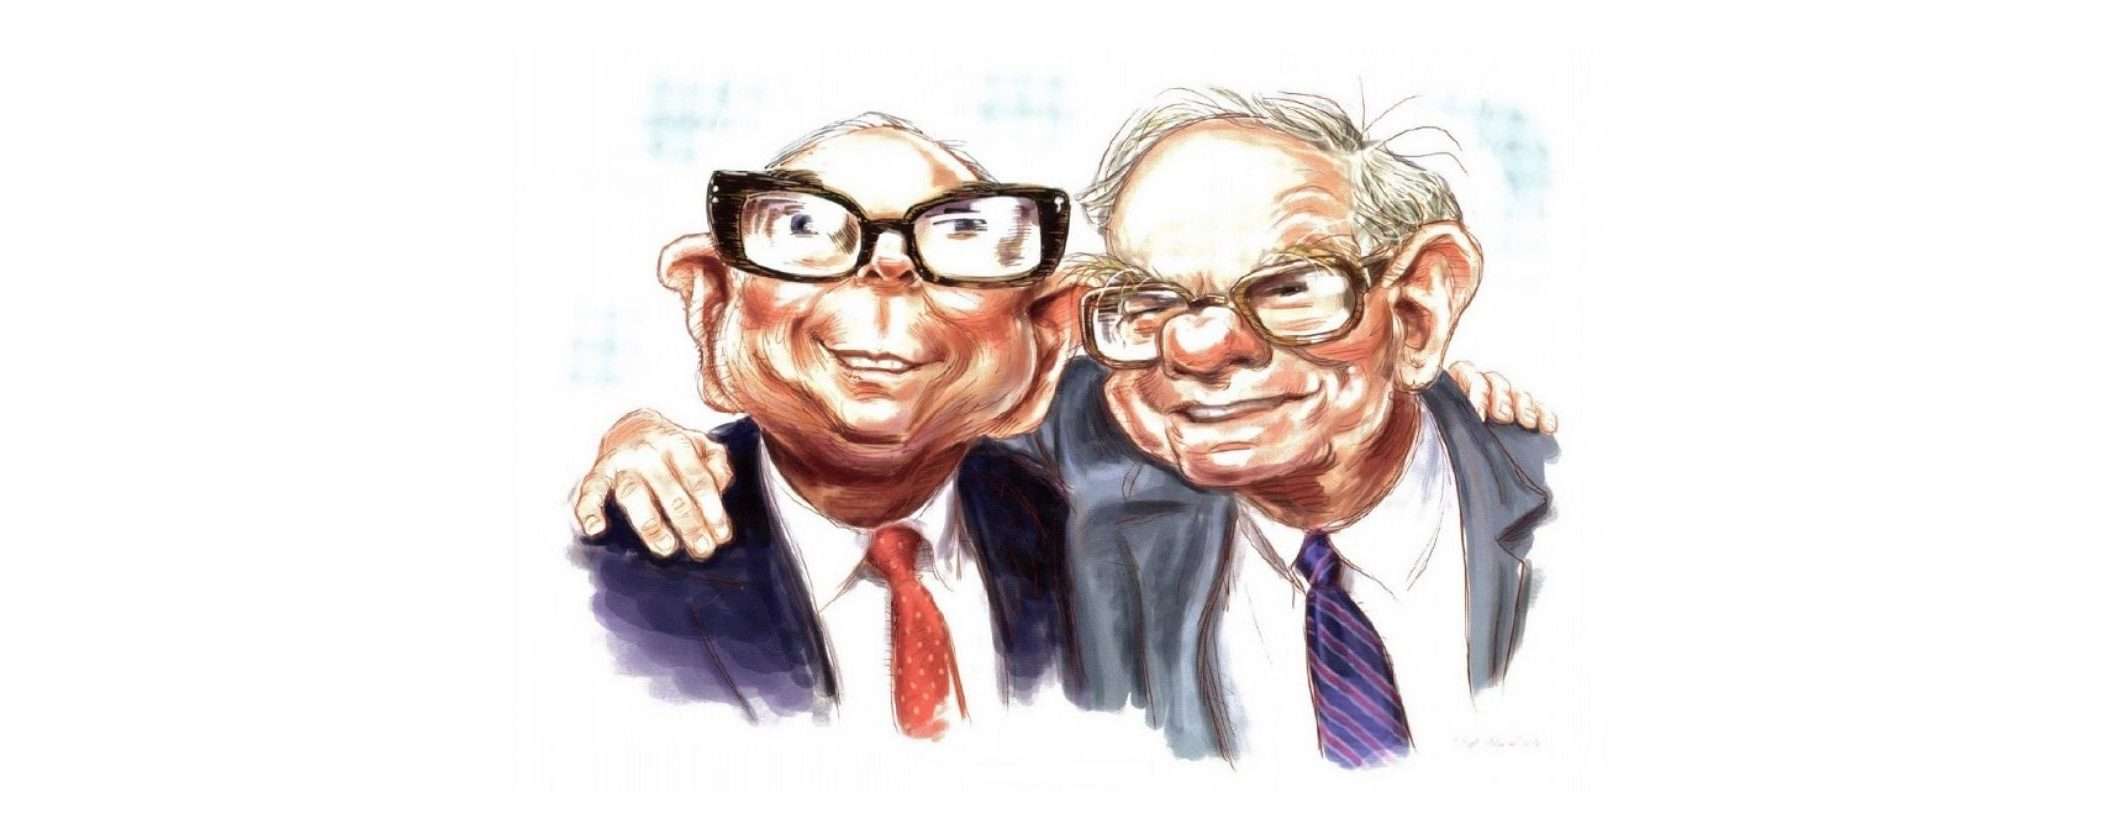 Bitcoin non vale neanche 25 dollari per Warren Buffett